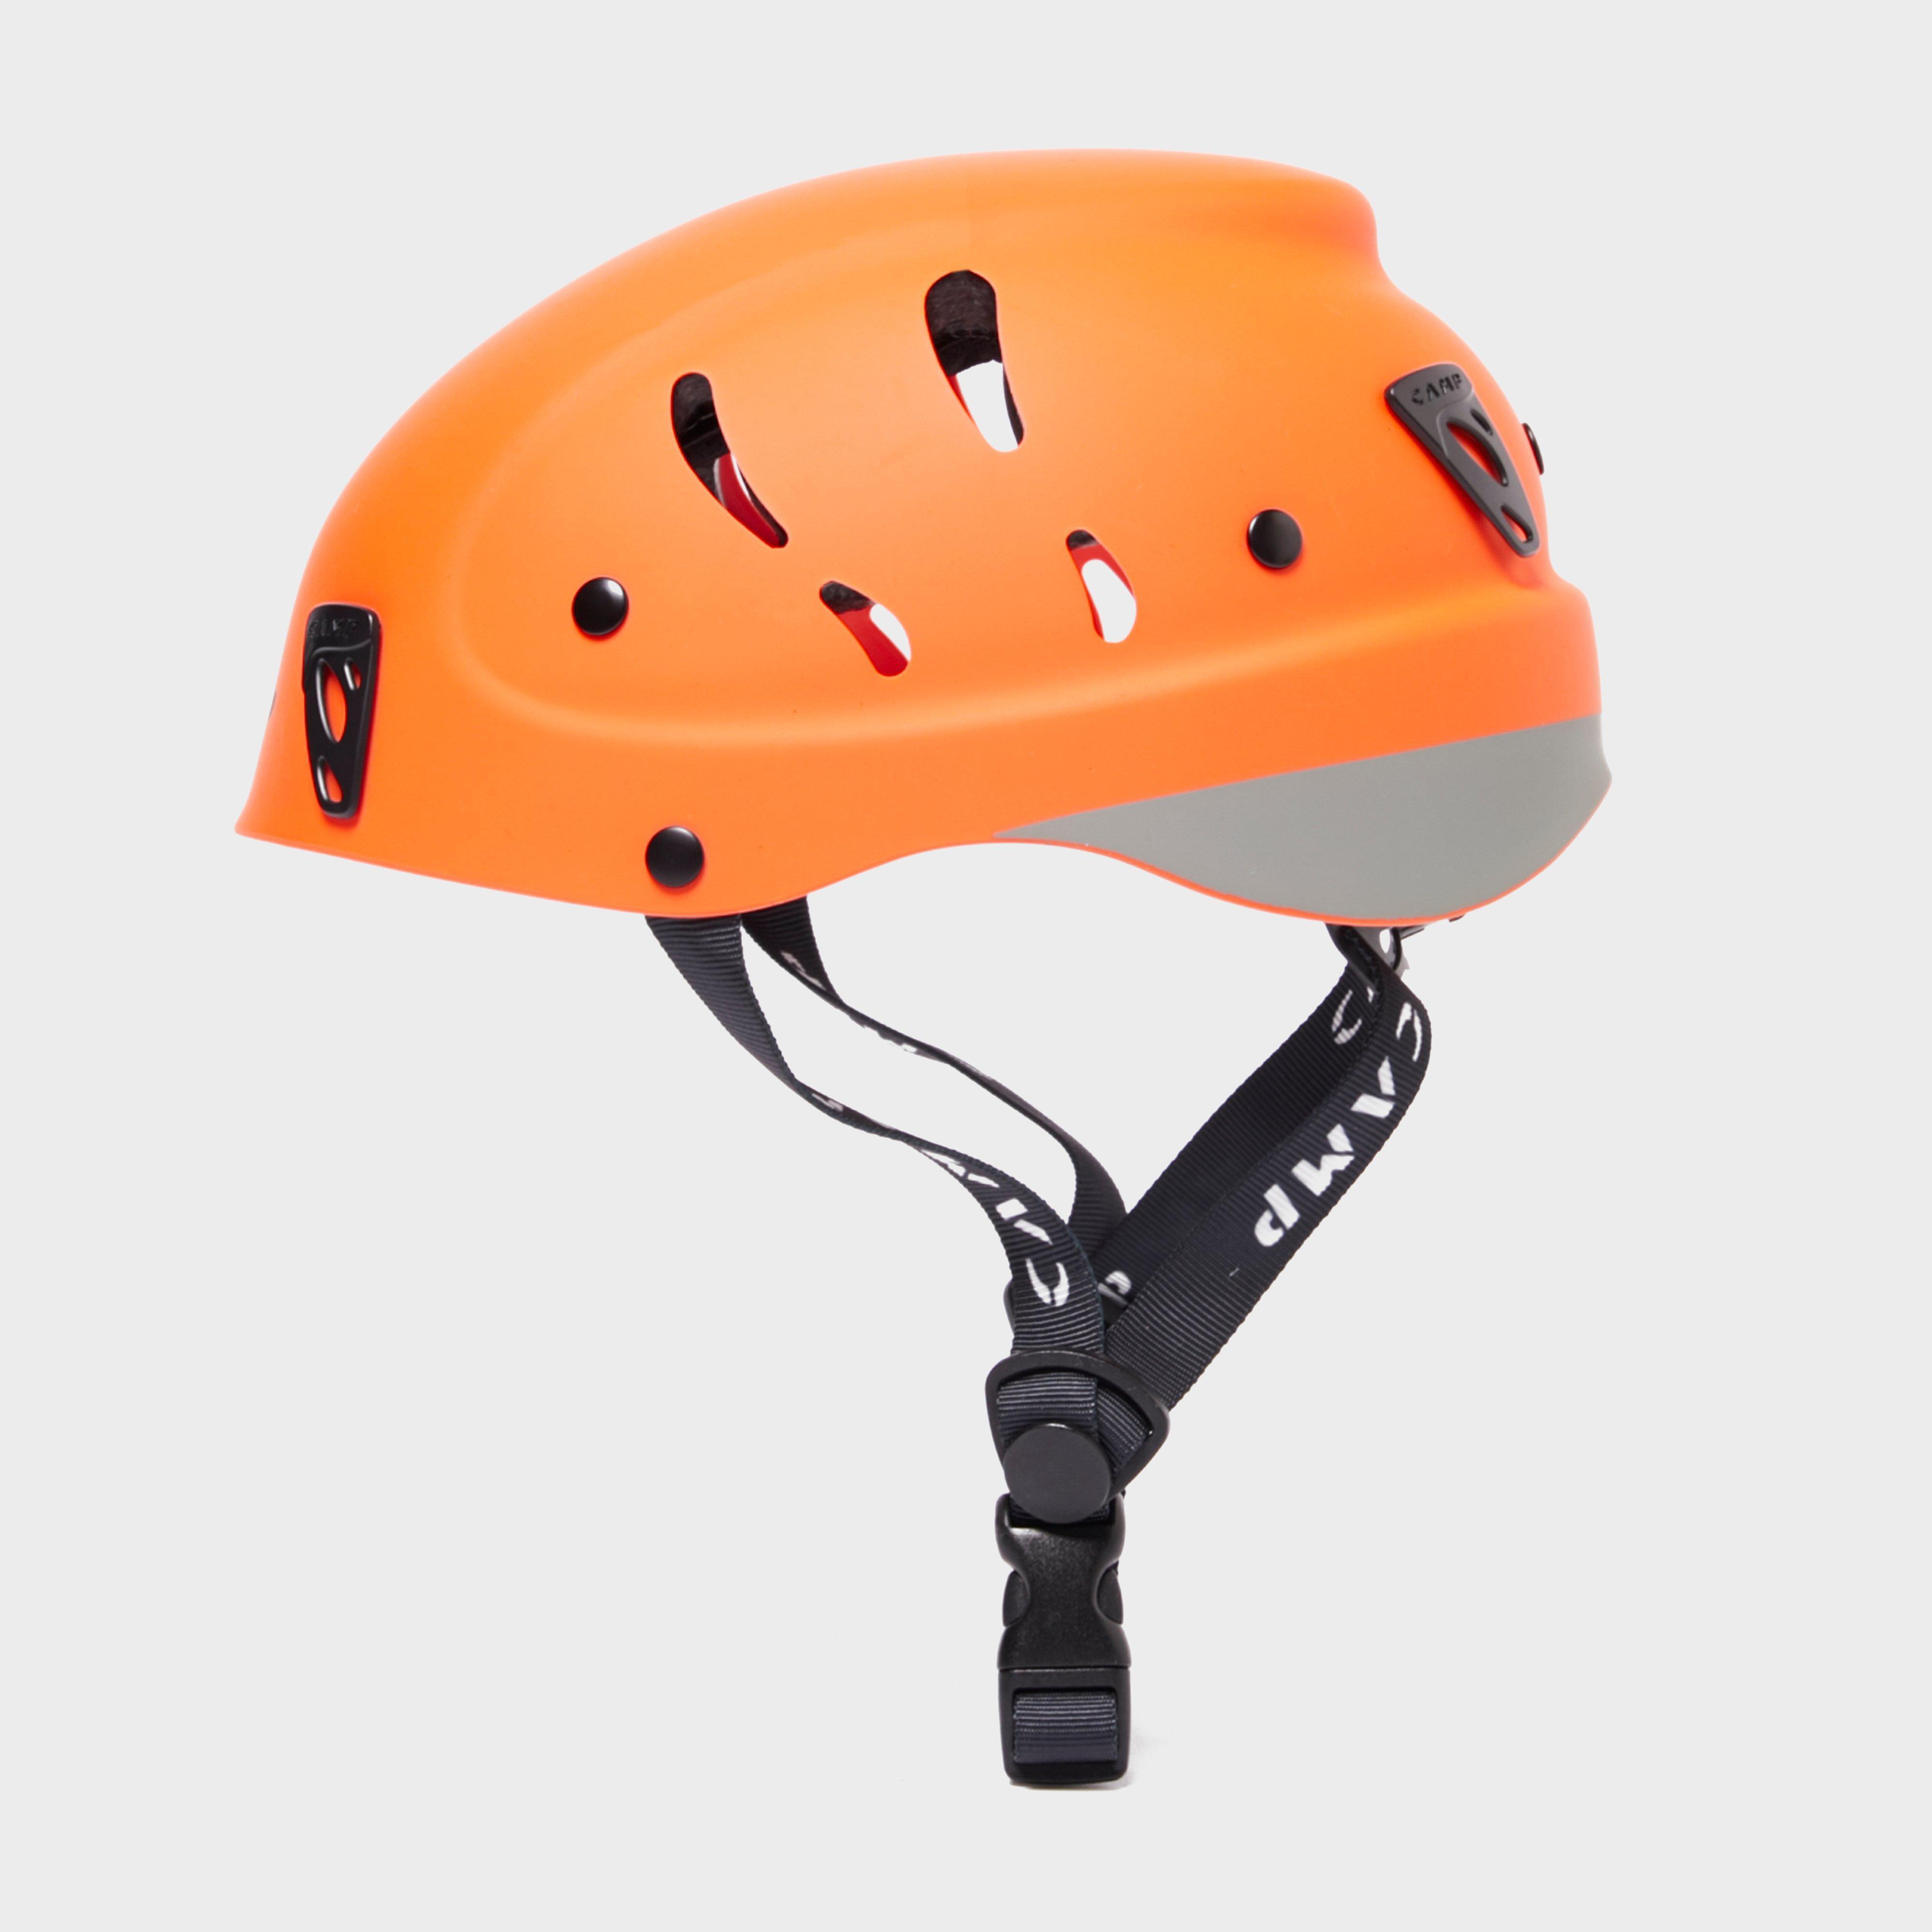 Camp Armour Pro Helmet Review